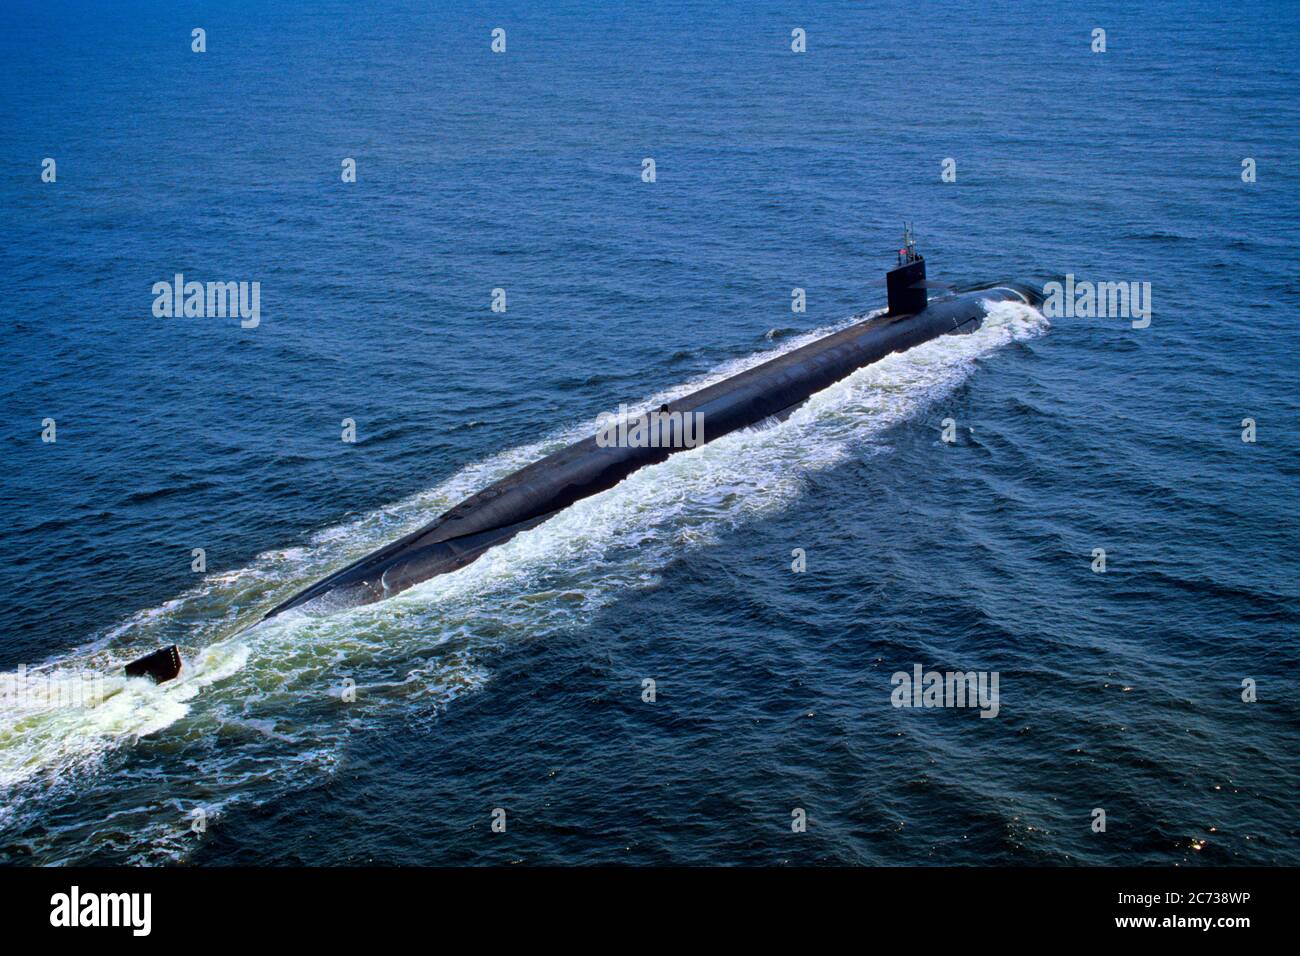 1990ER USS PENNSYLVANIA UNITED STATES NAVY NUKLEARBETRIEBENE OHIO-KLASSE BALLISTISCHE RAKETEN U-BOOT KREUZFAHRT AUF DER OZEANOBERFLÄCHE - KM11192 SMT001 HARS ALTMODISCH Stockfoto